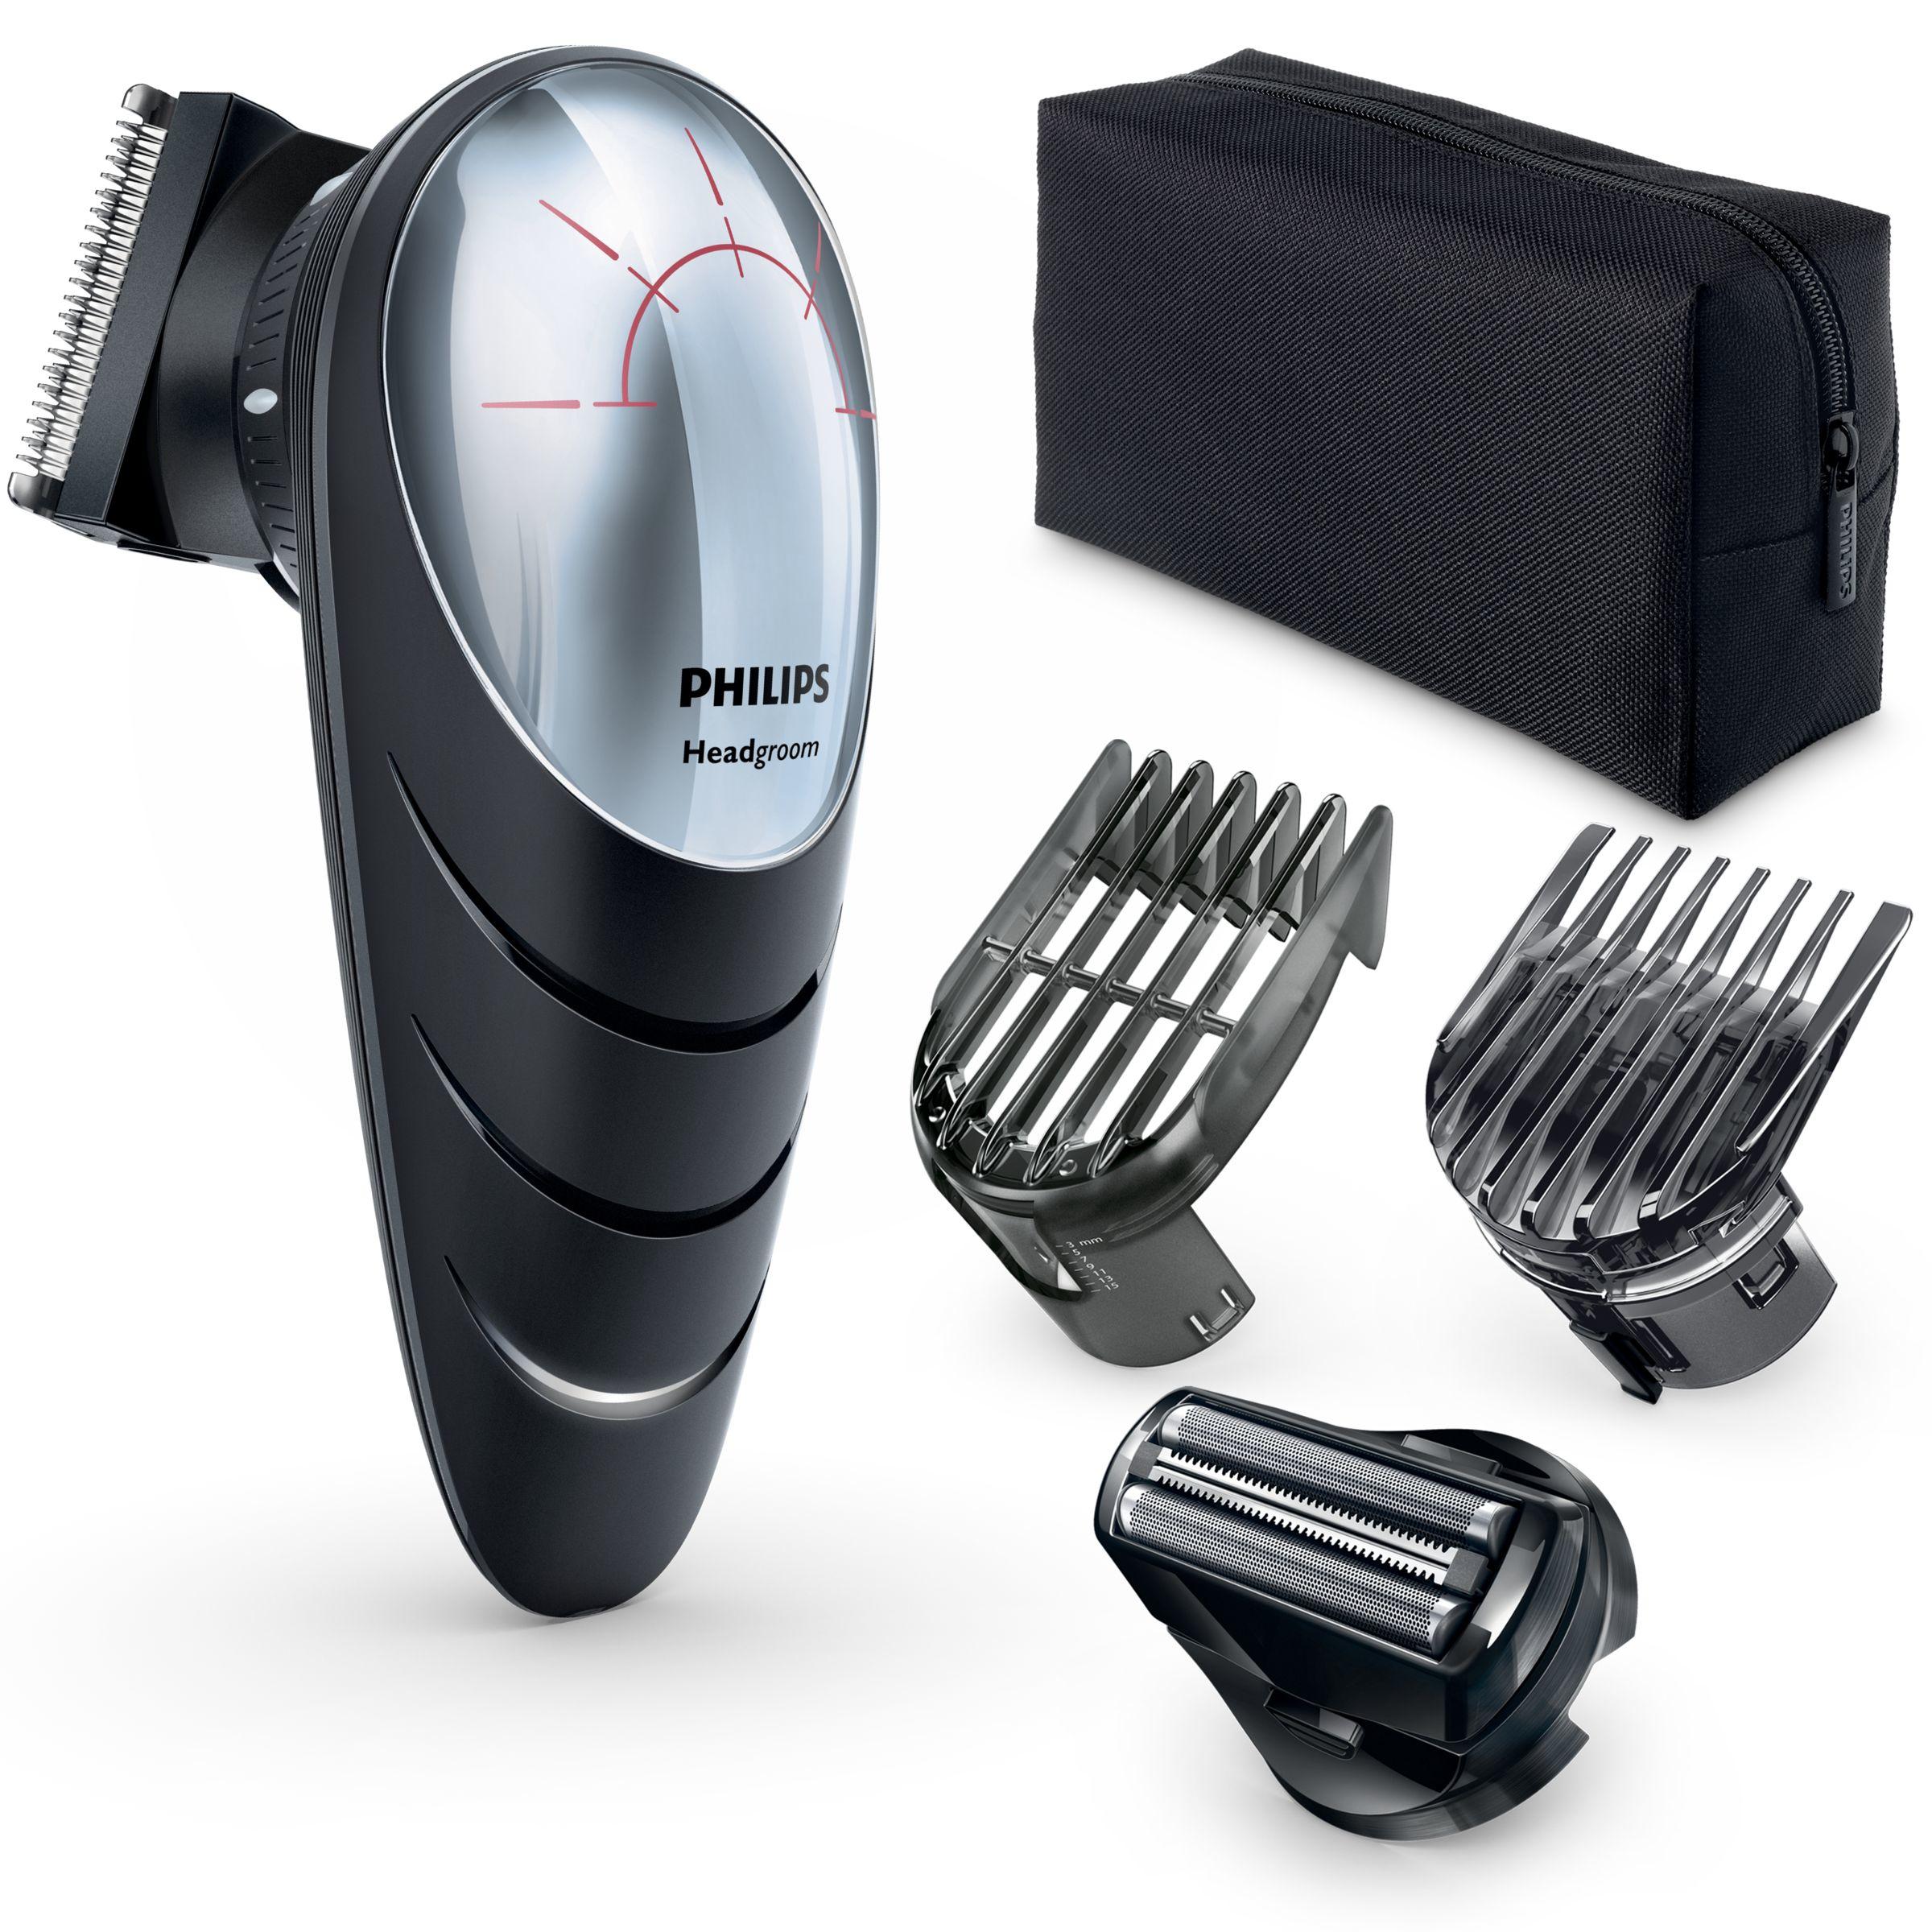 Прибор для стрижки волос. Philips QC 5580. Philips Norelco hair Clipper Pro. Машинка для стрижки Филипс qc5055. Philips hair Clipper триммер.